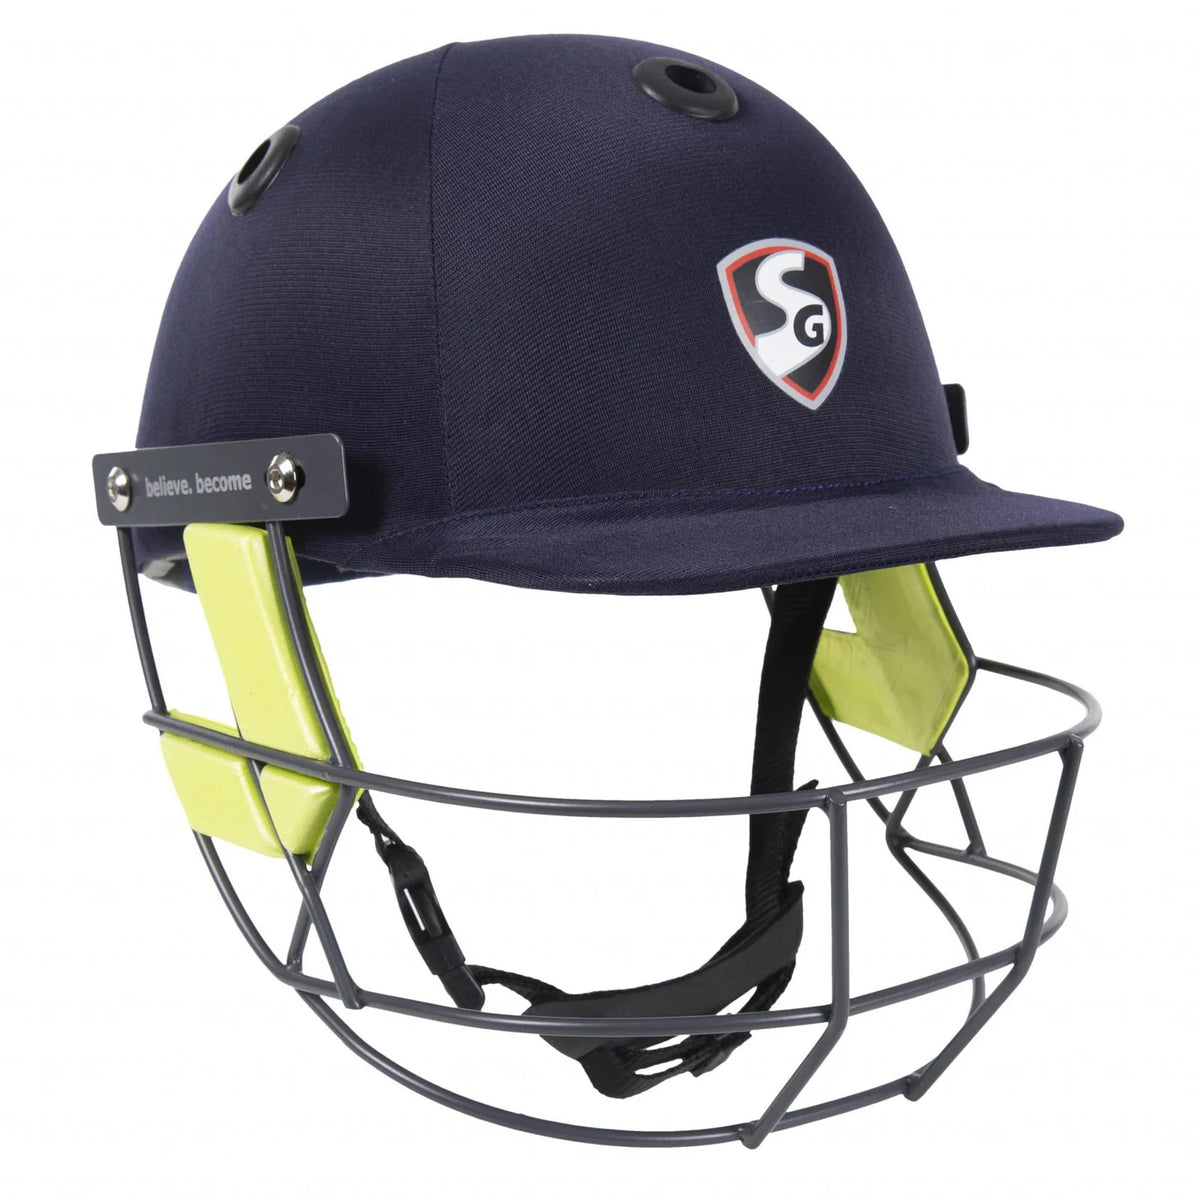 Pre-Order SG Aeroselect Cricket Helmet